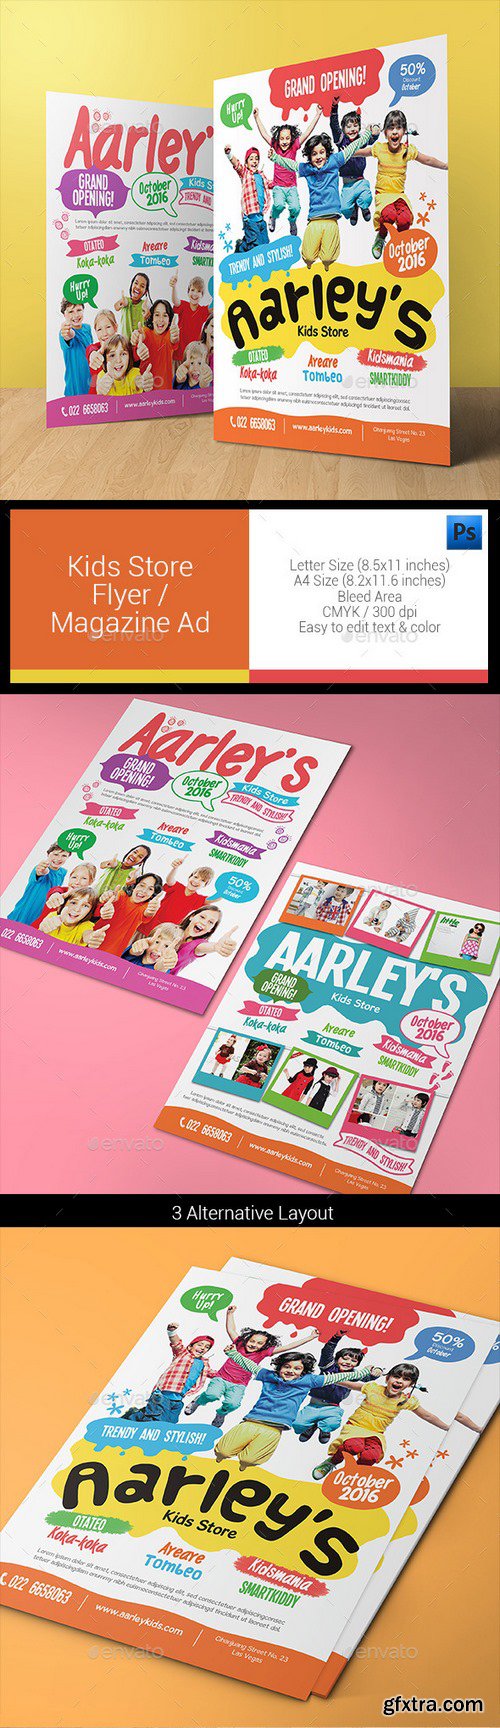 Graphicriver - Kids Store Flyer / Magazine Ad 11740148